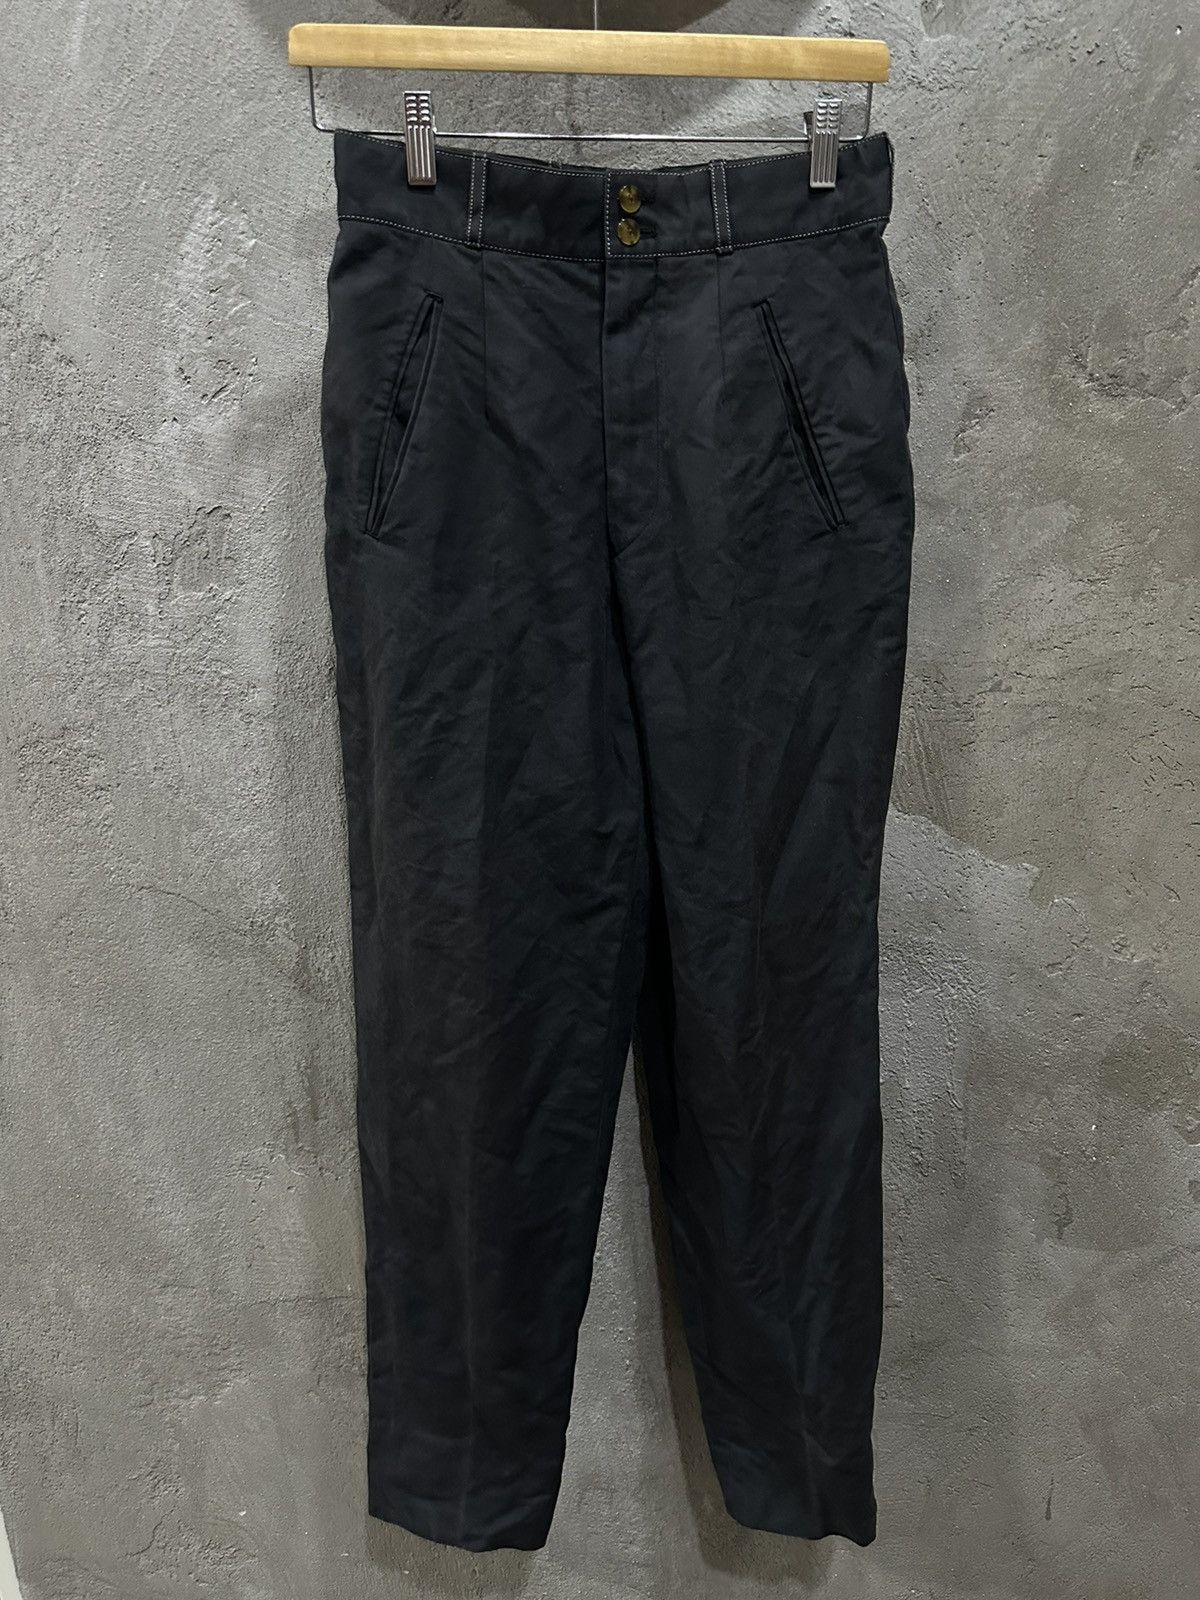 Jean Paul Gaultier Trousers Black Faded Pant - 12